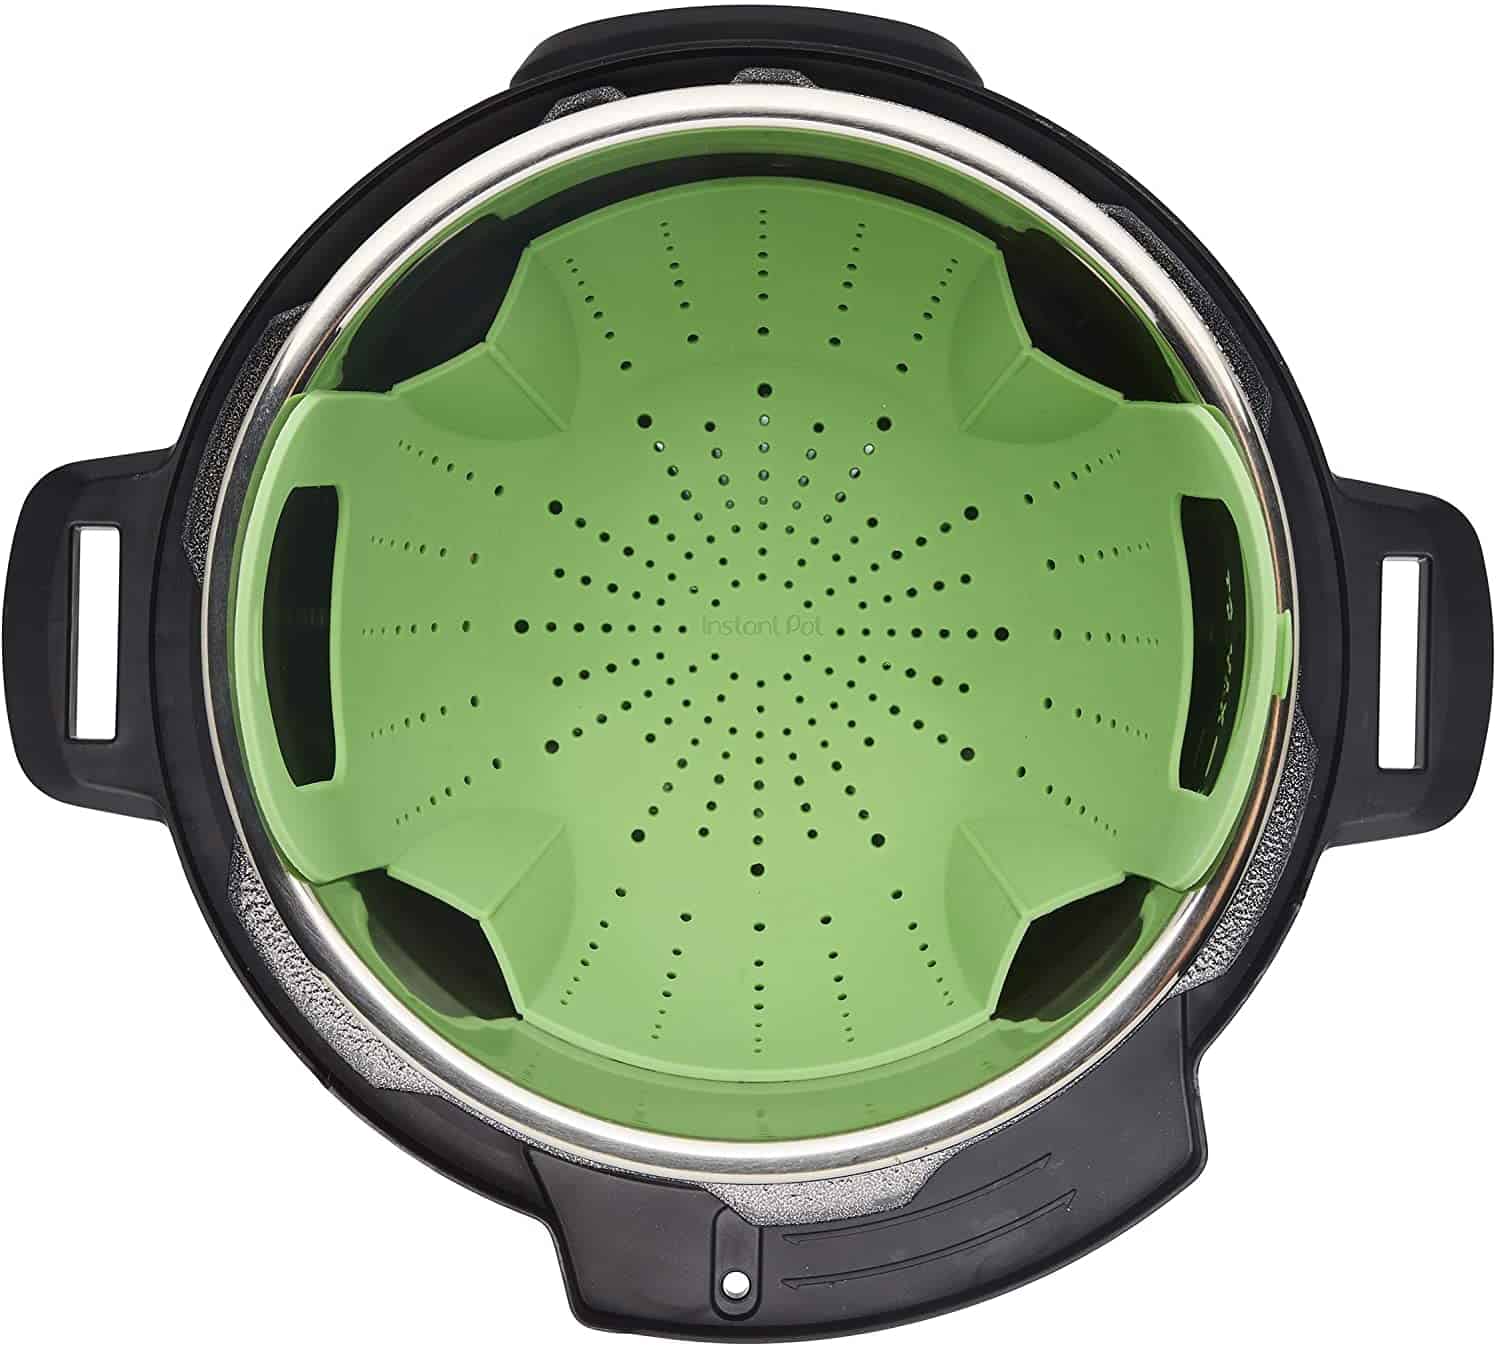 official instant pot accessories green steamer insert